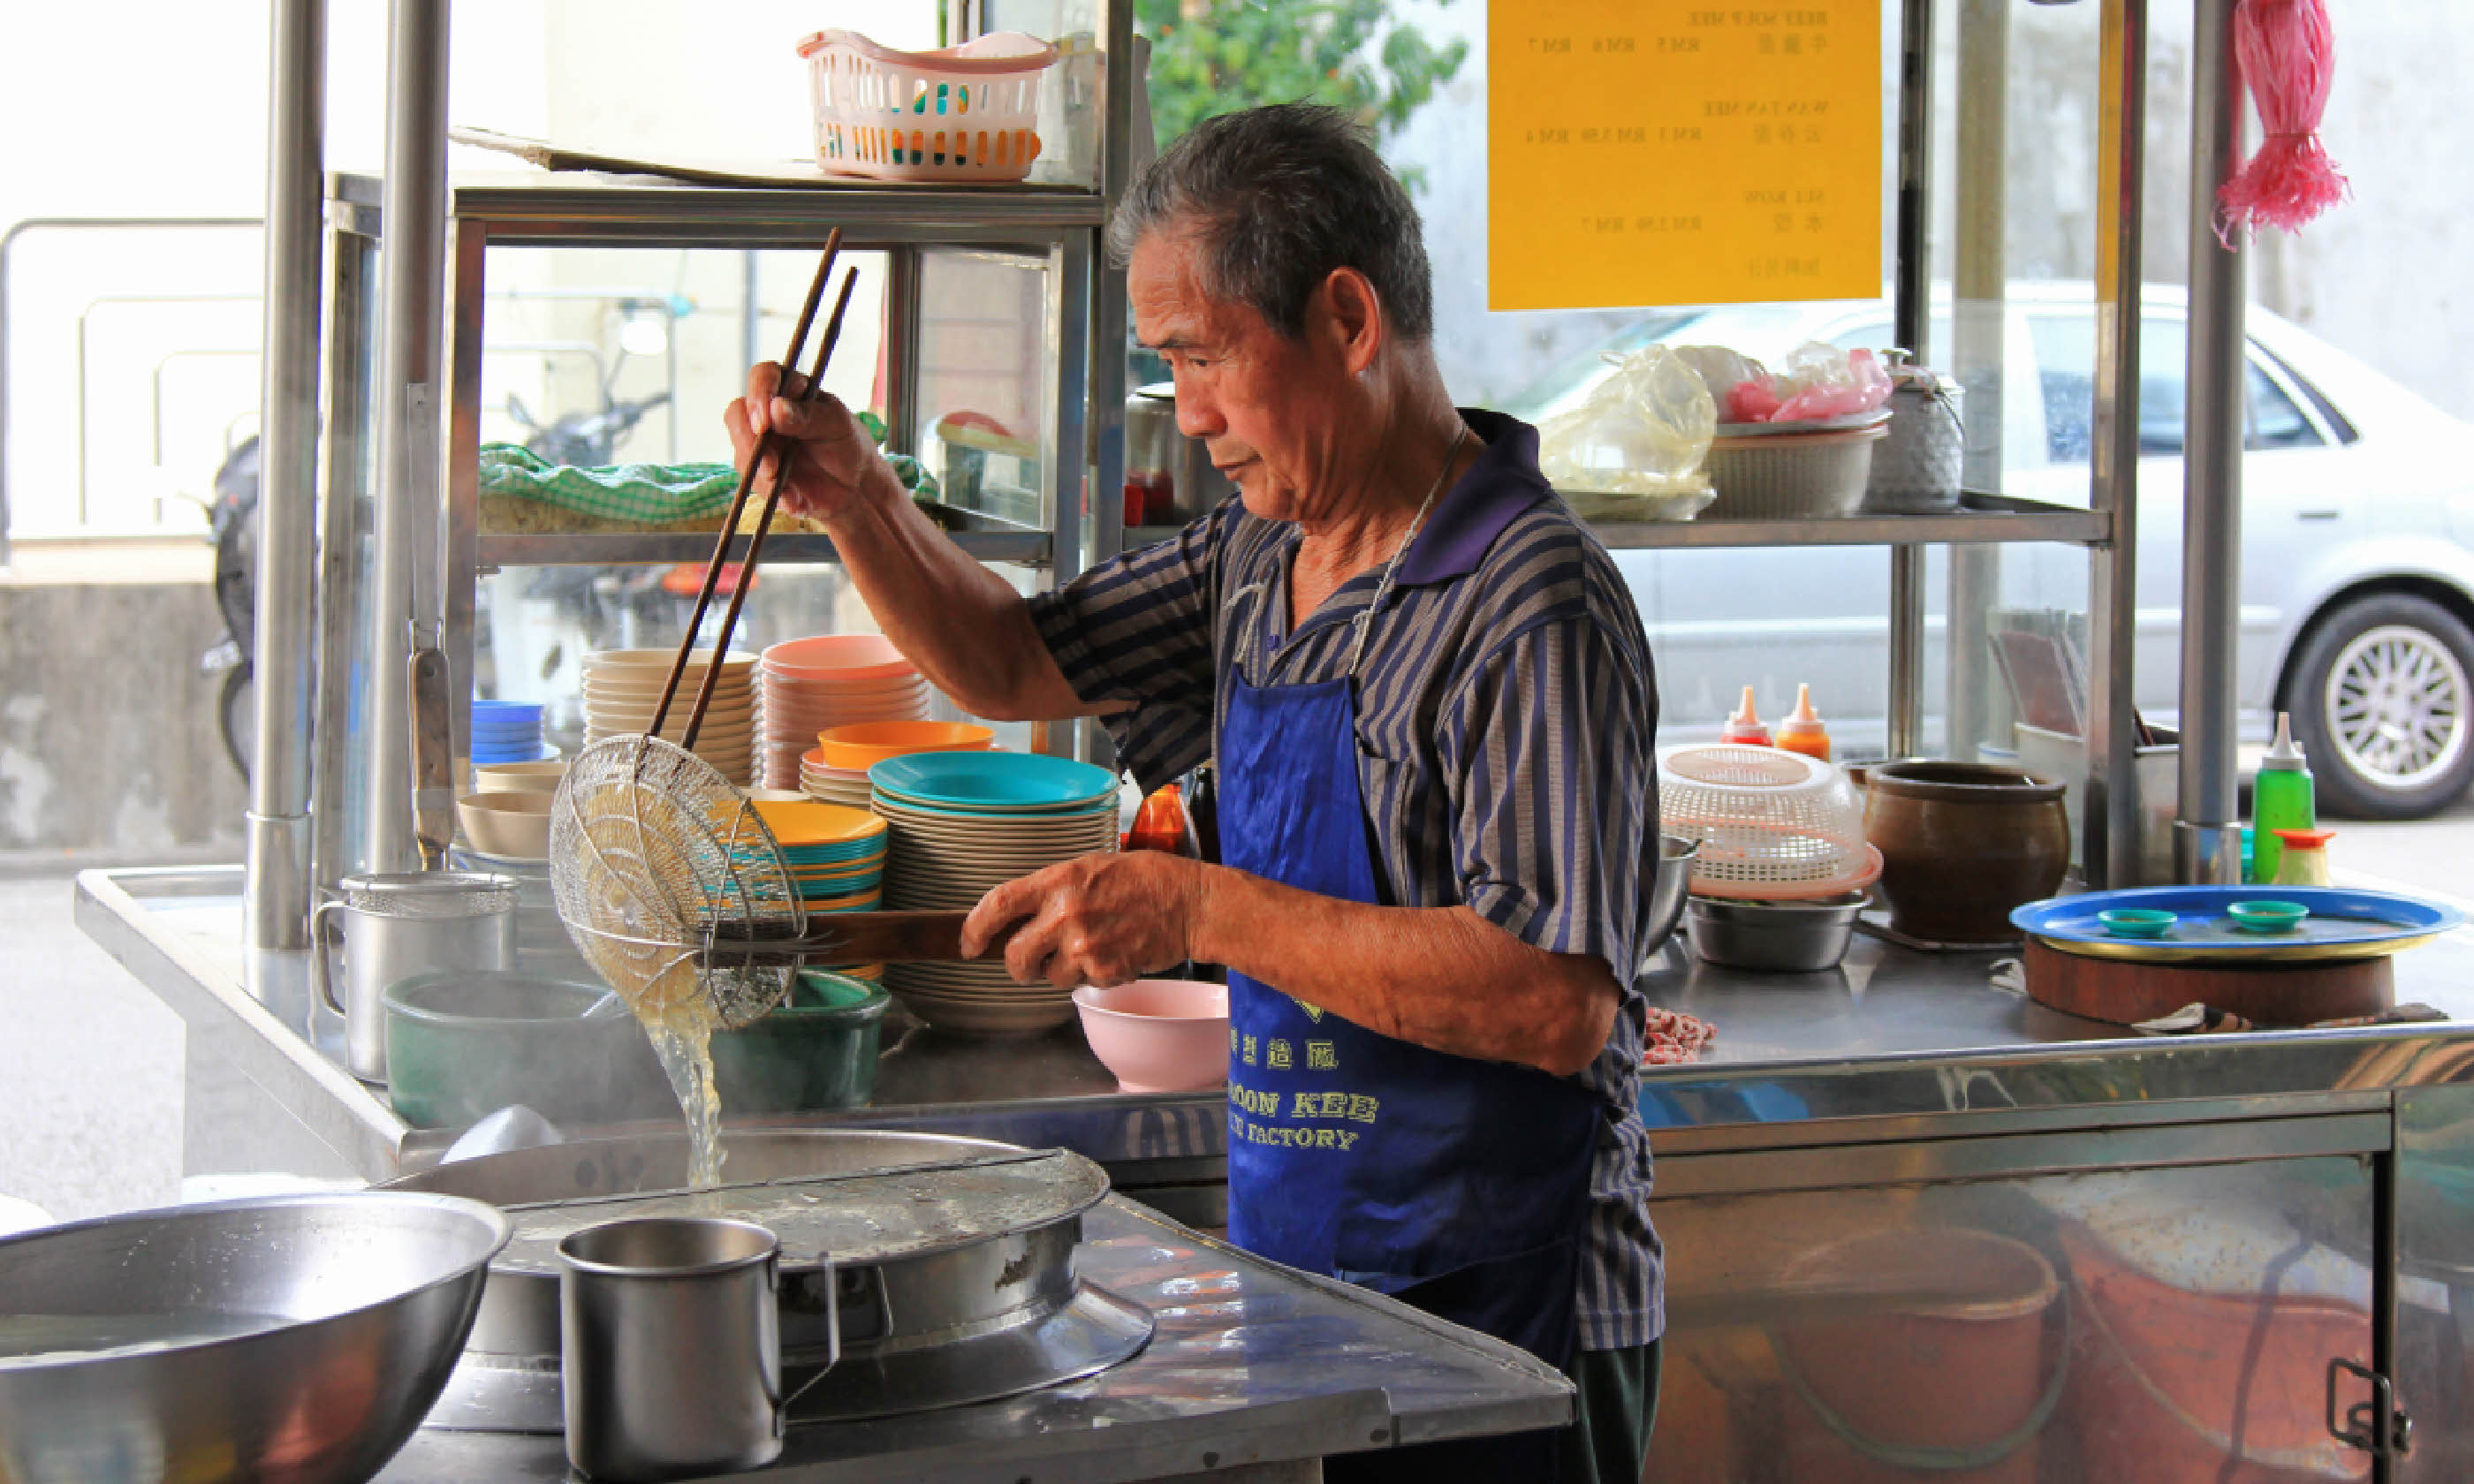 Noodle stall on Lorong Kampung Malabar street in Penang, Malaysia (Shutterstock)